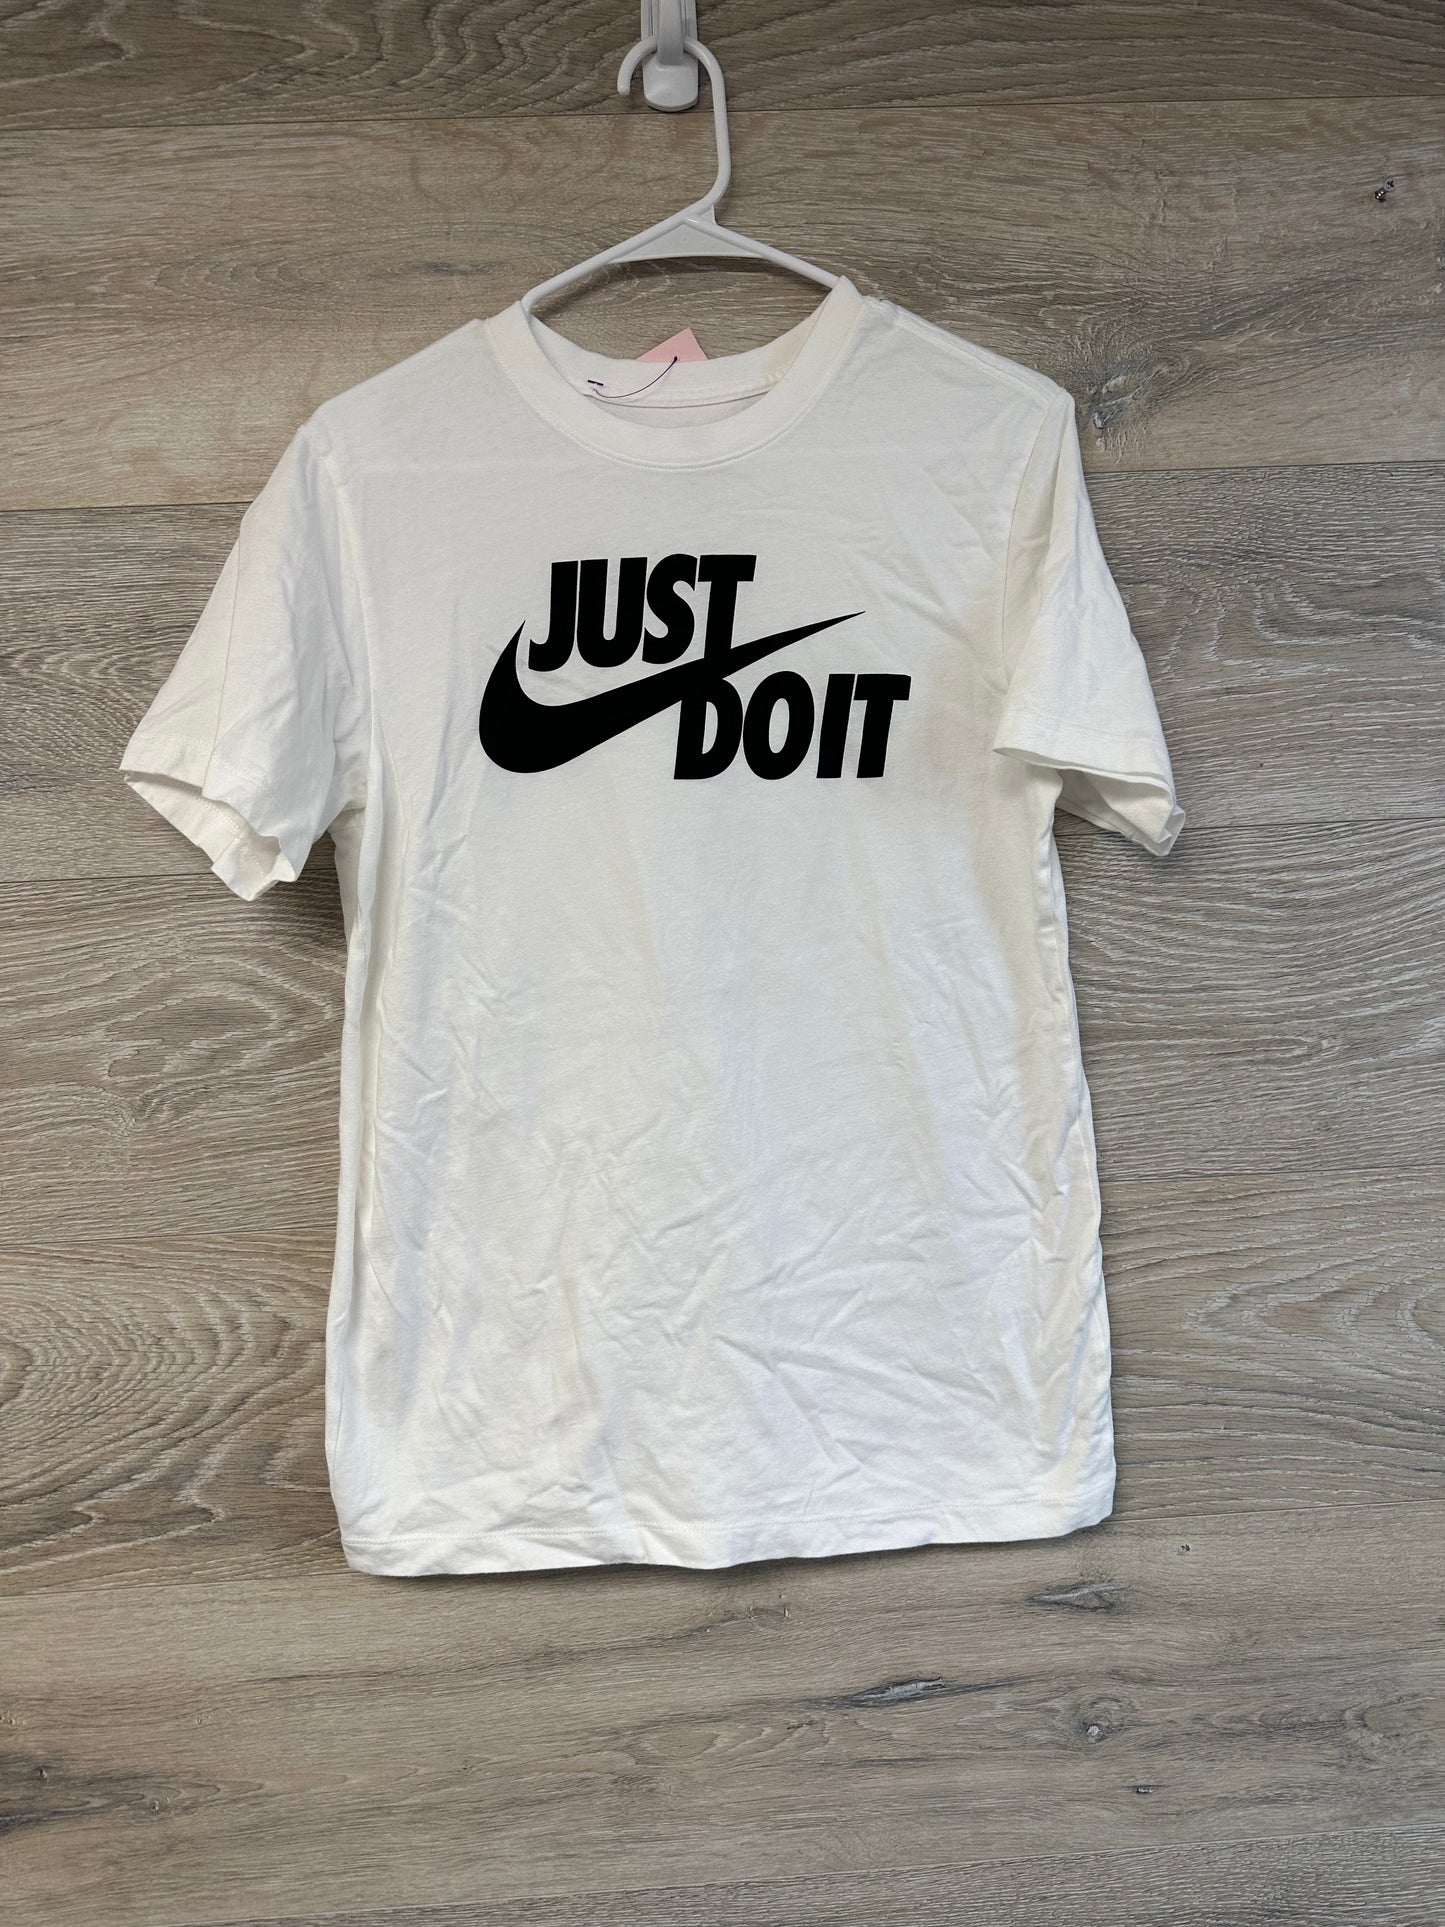 Nike Sportswear JDI
Men's T-Shirt size small NO TAGS